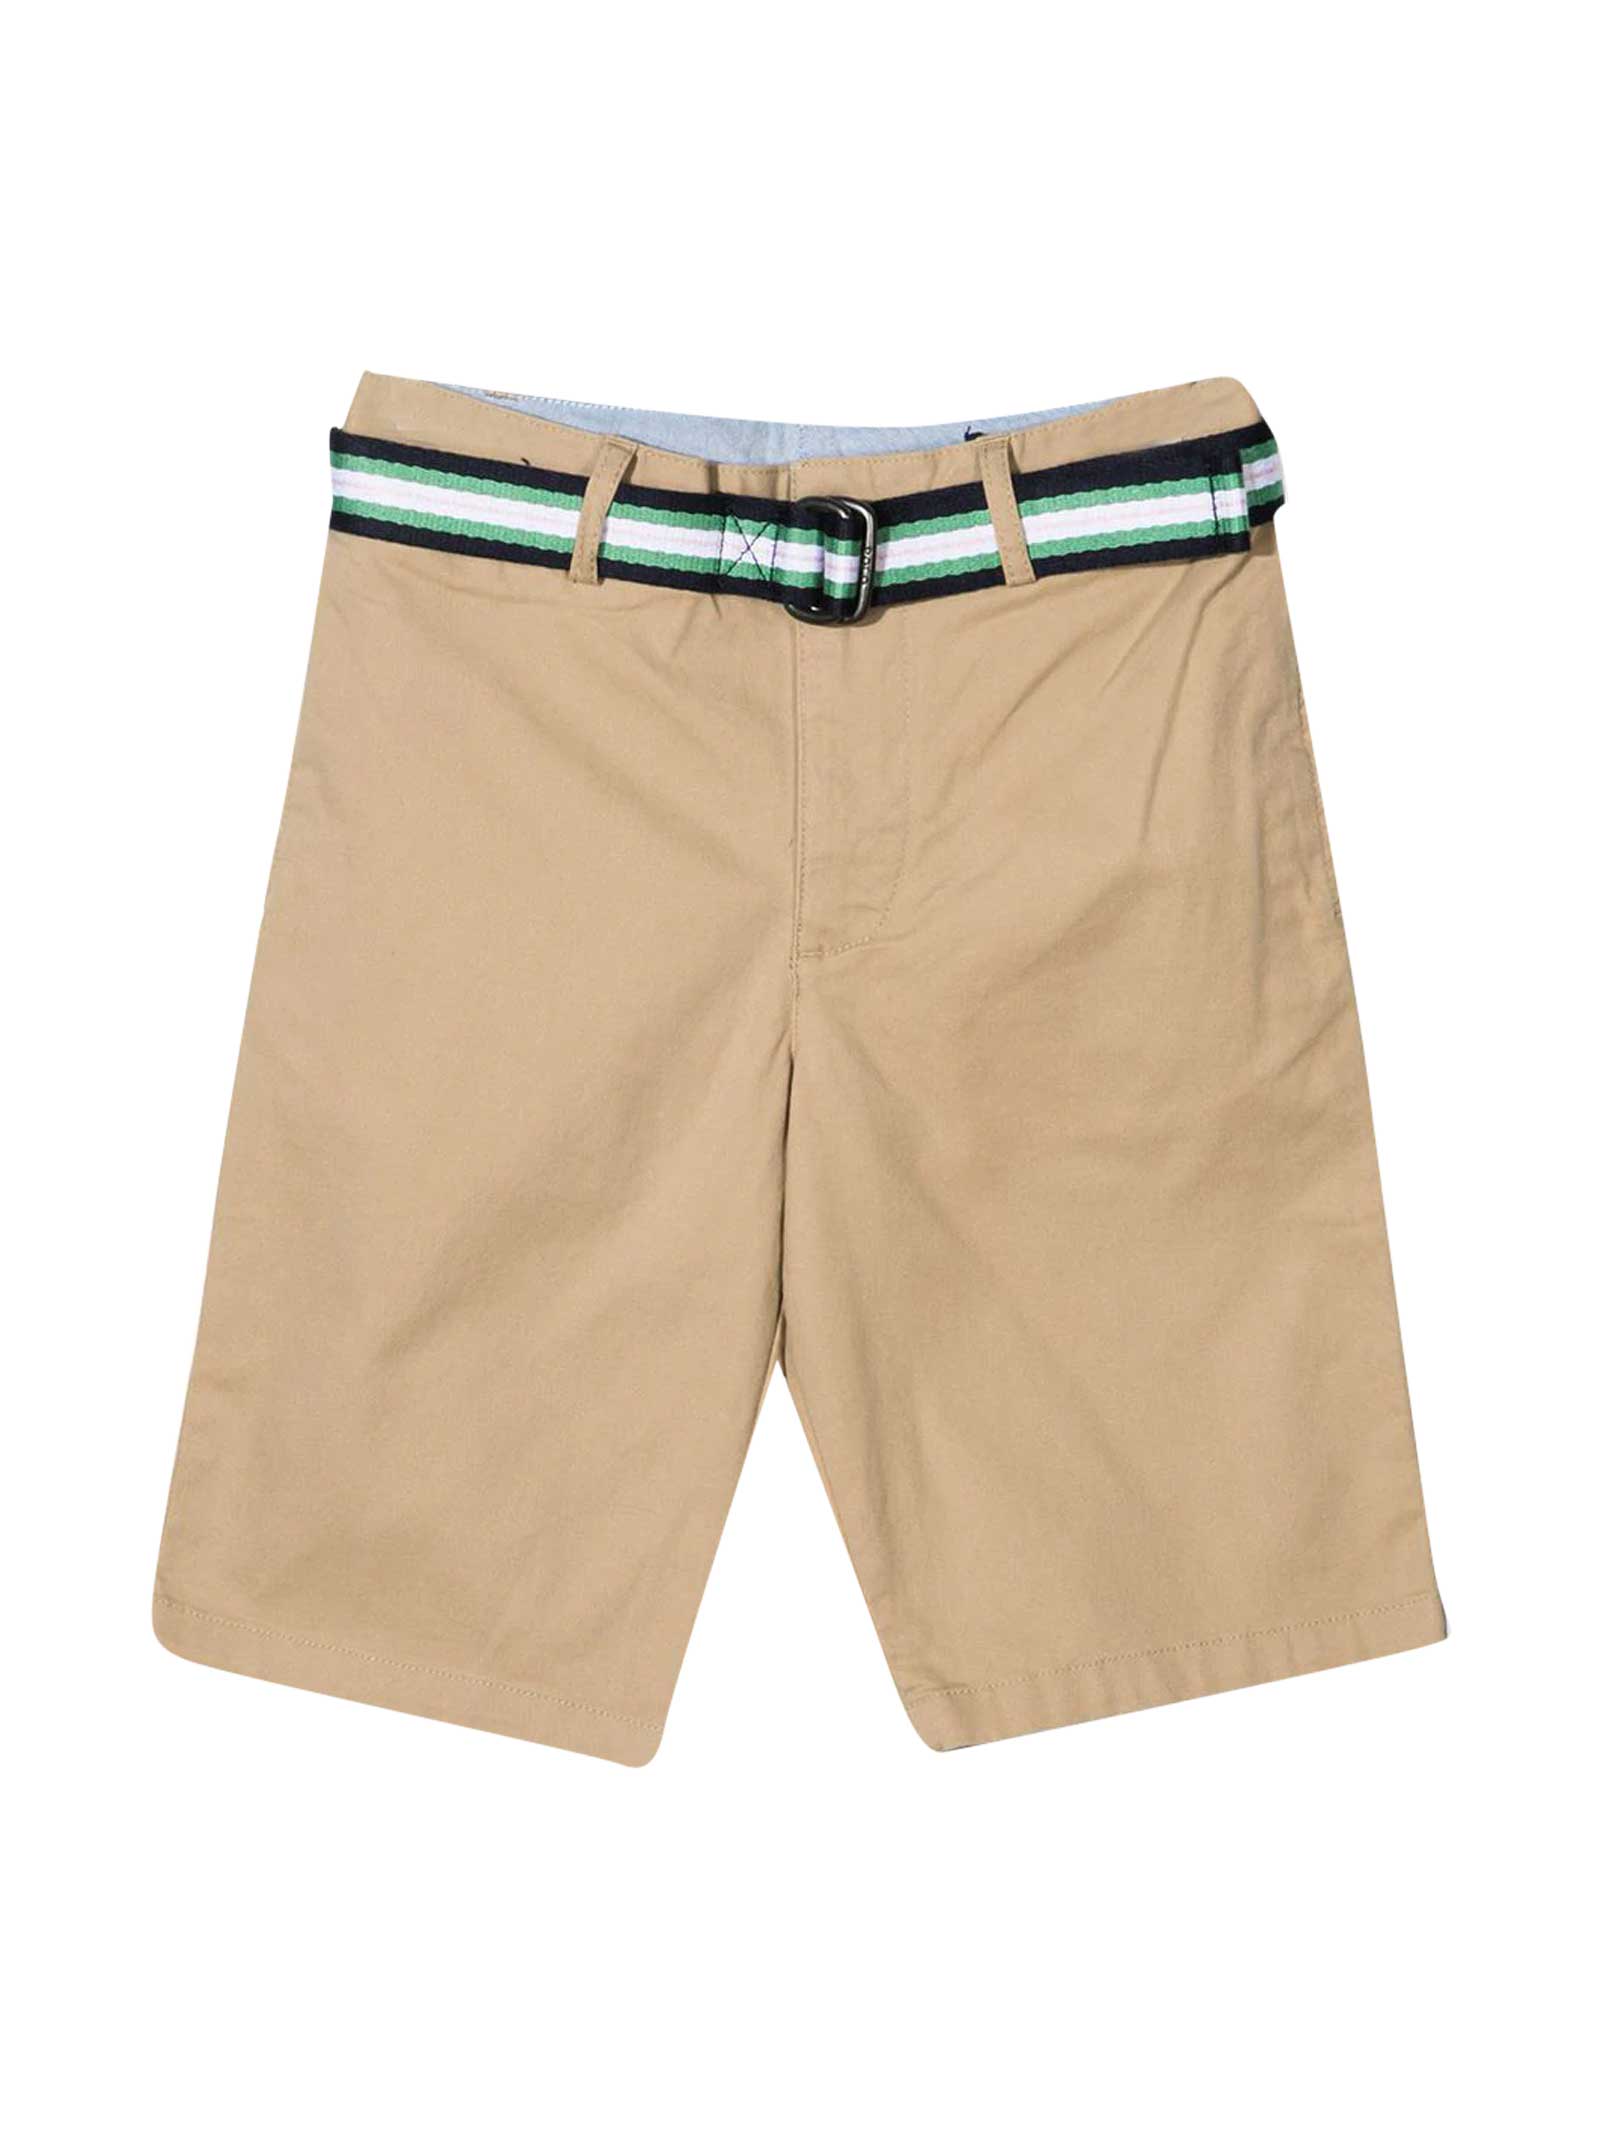 Ralph Lauren Khaki Bermuda Shorts With Belt